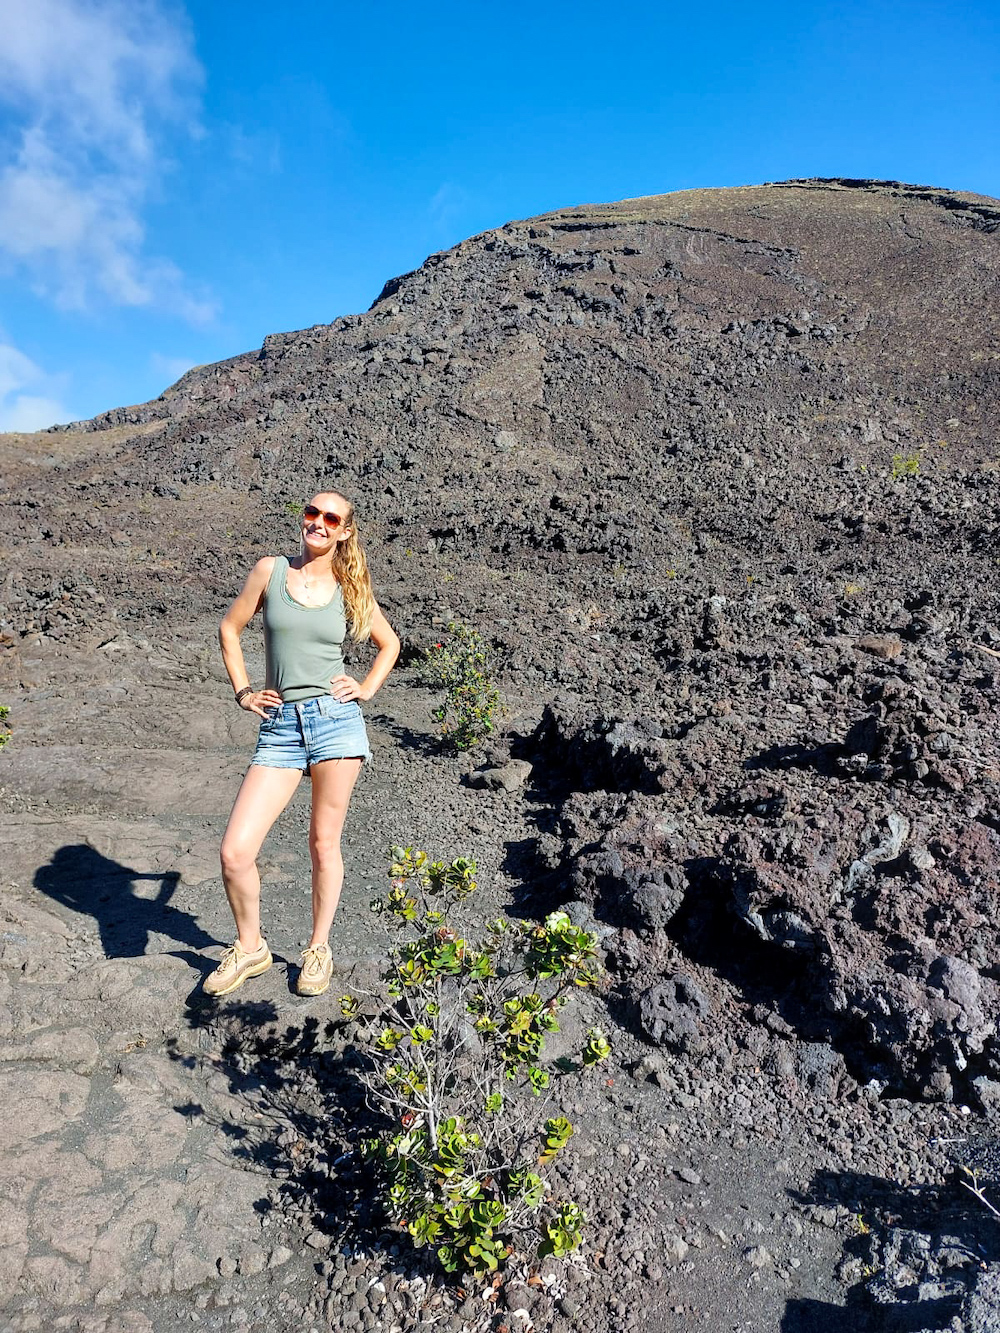 vulkanen big island hawaii nationale park